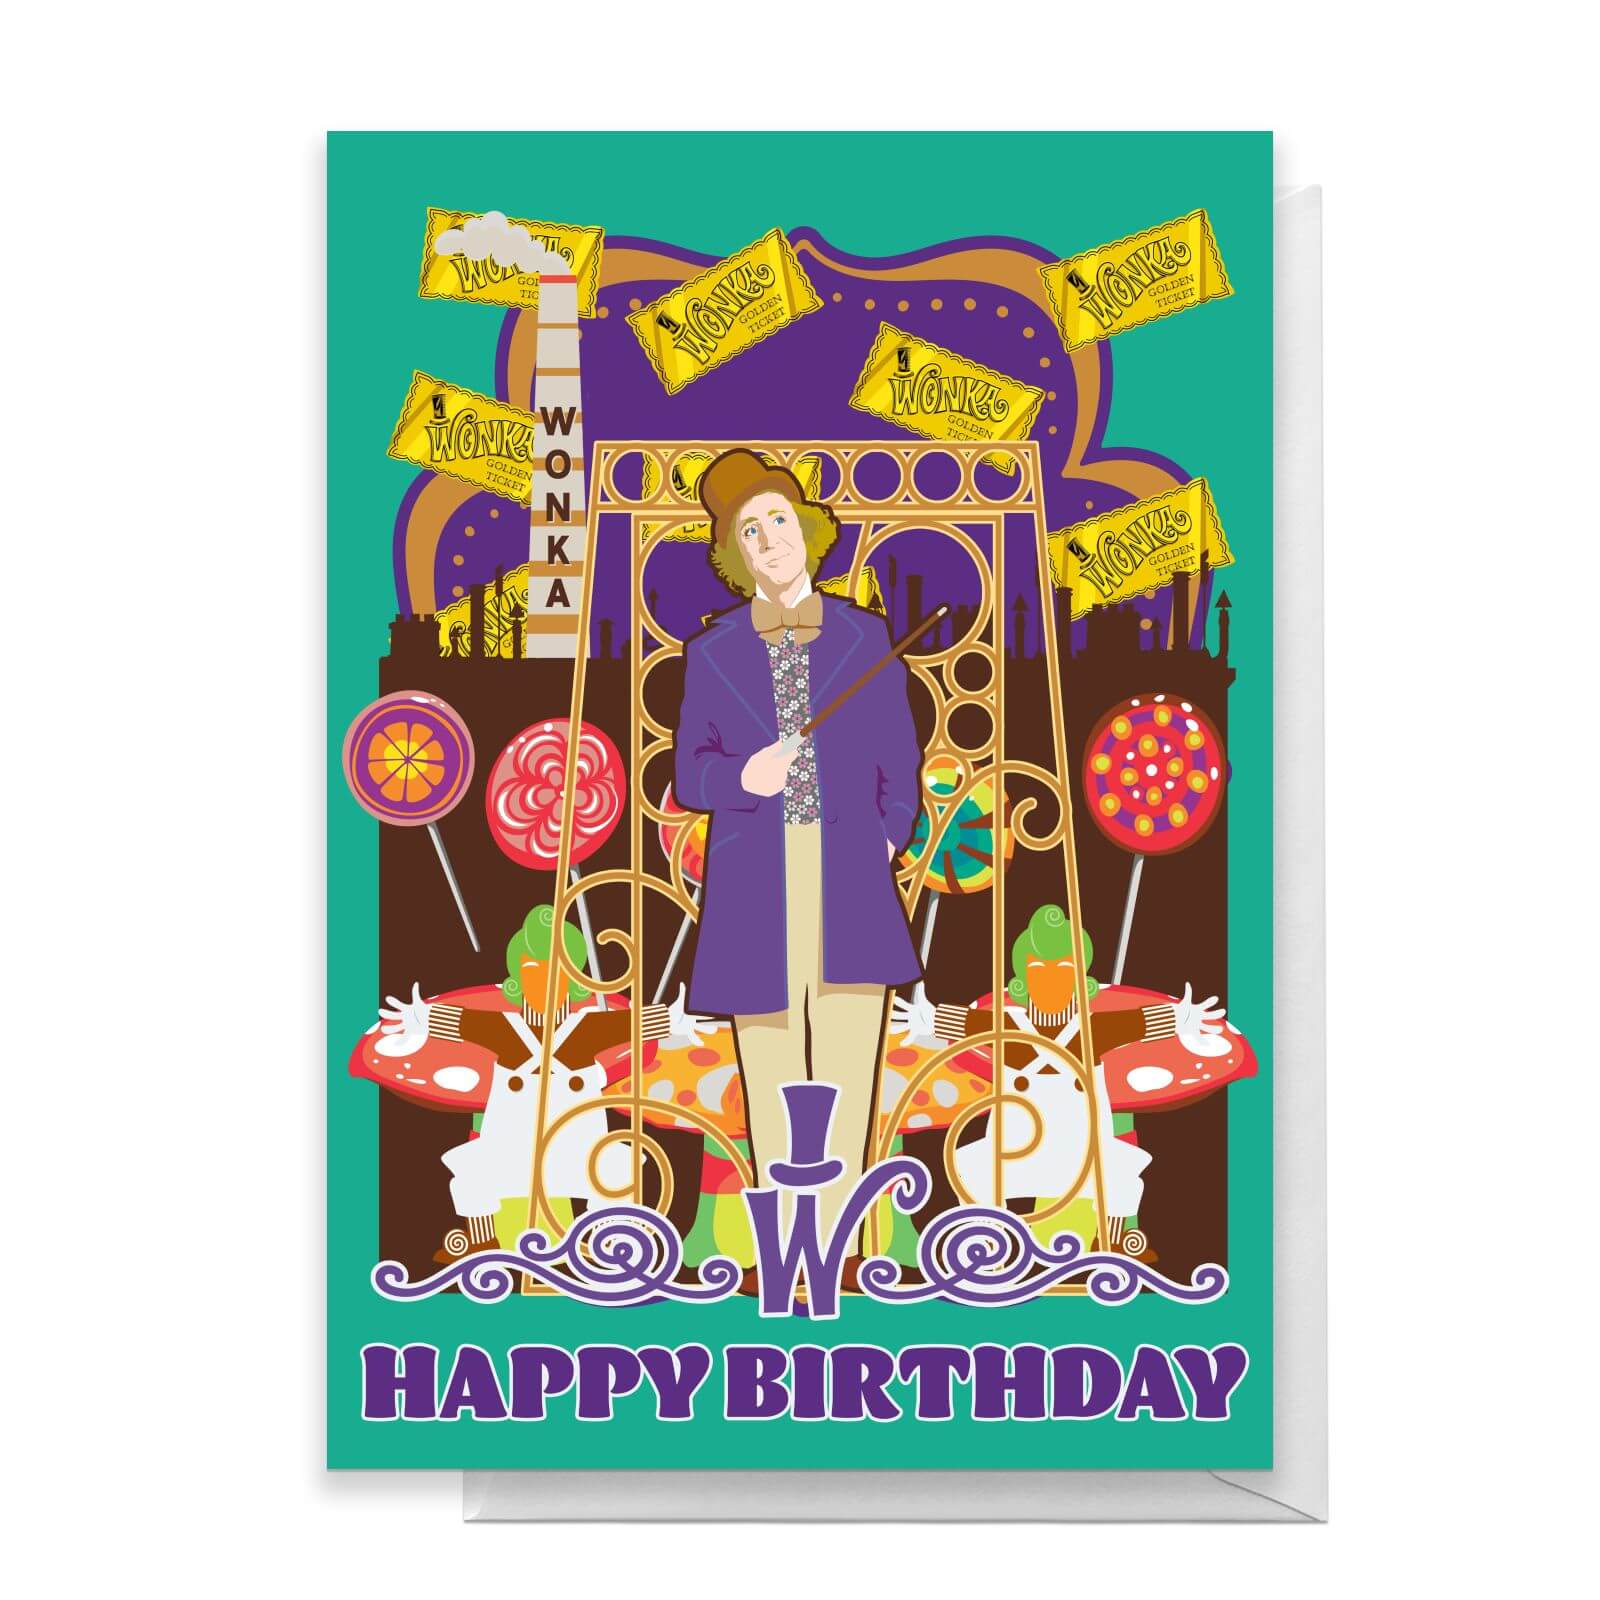 Willy Wonka Birthday Greetings Card - Standard Card